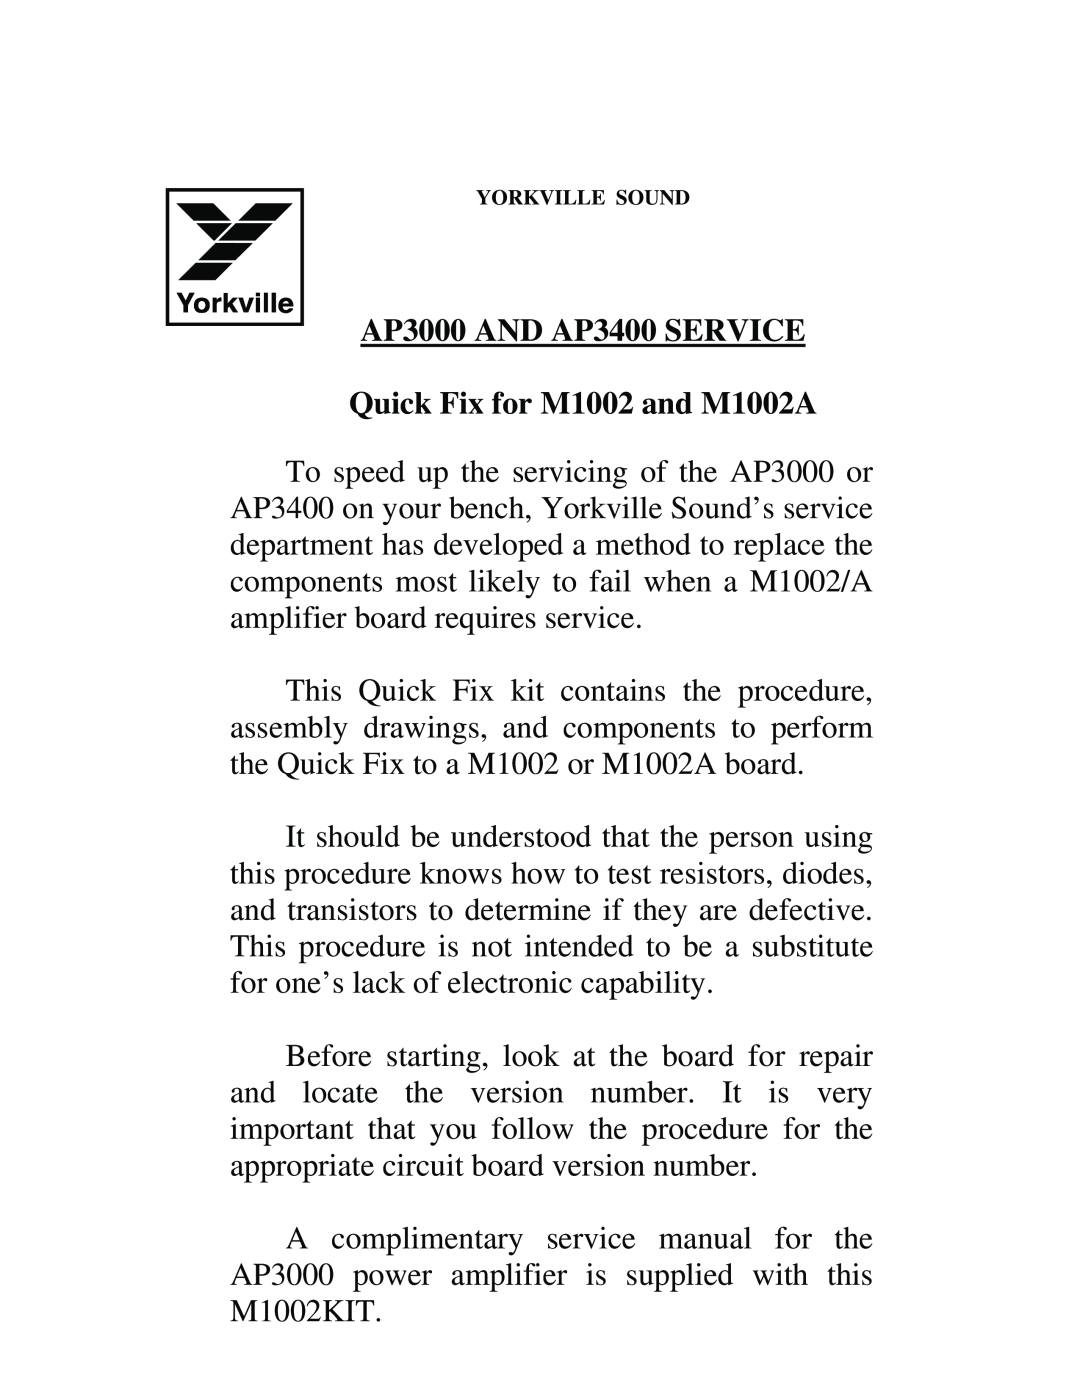 Yorkville Sound service manual AP3000 AND AP3400 SERVICE, Quick Fix for M1002 and M1002A, Yorkville Sound 